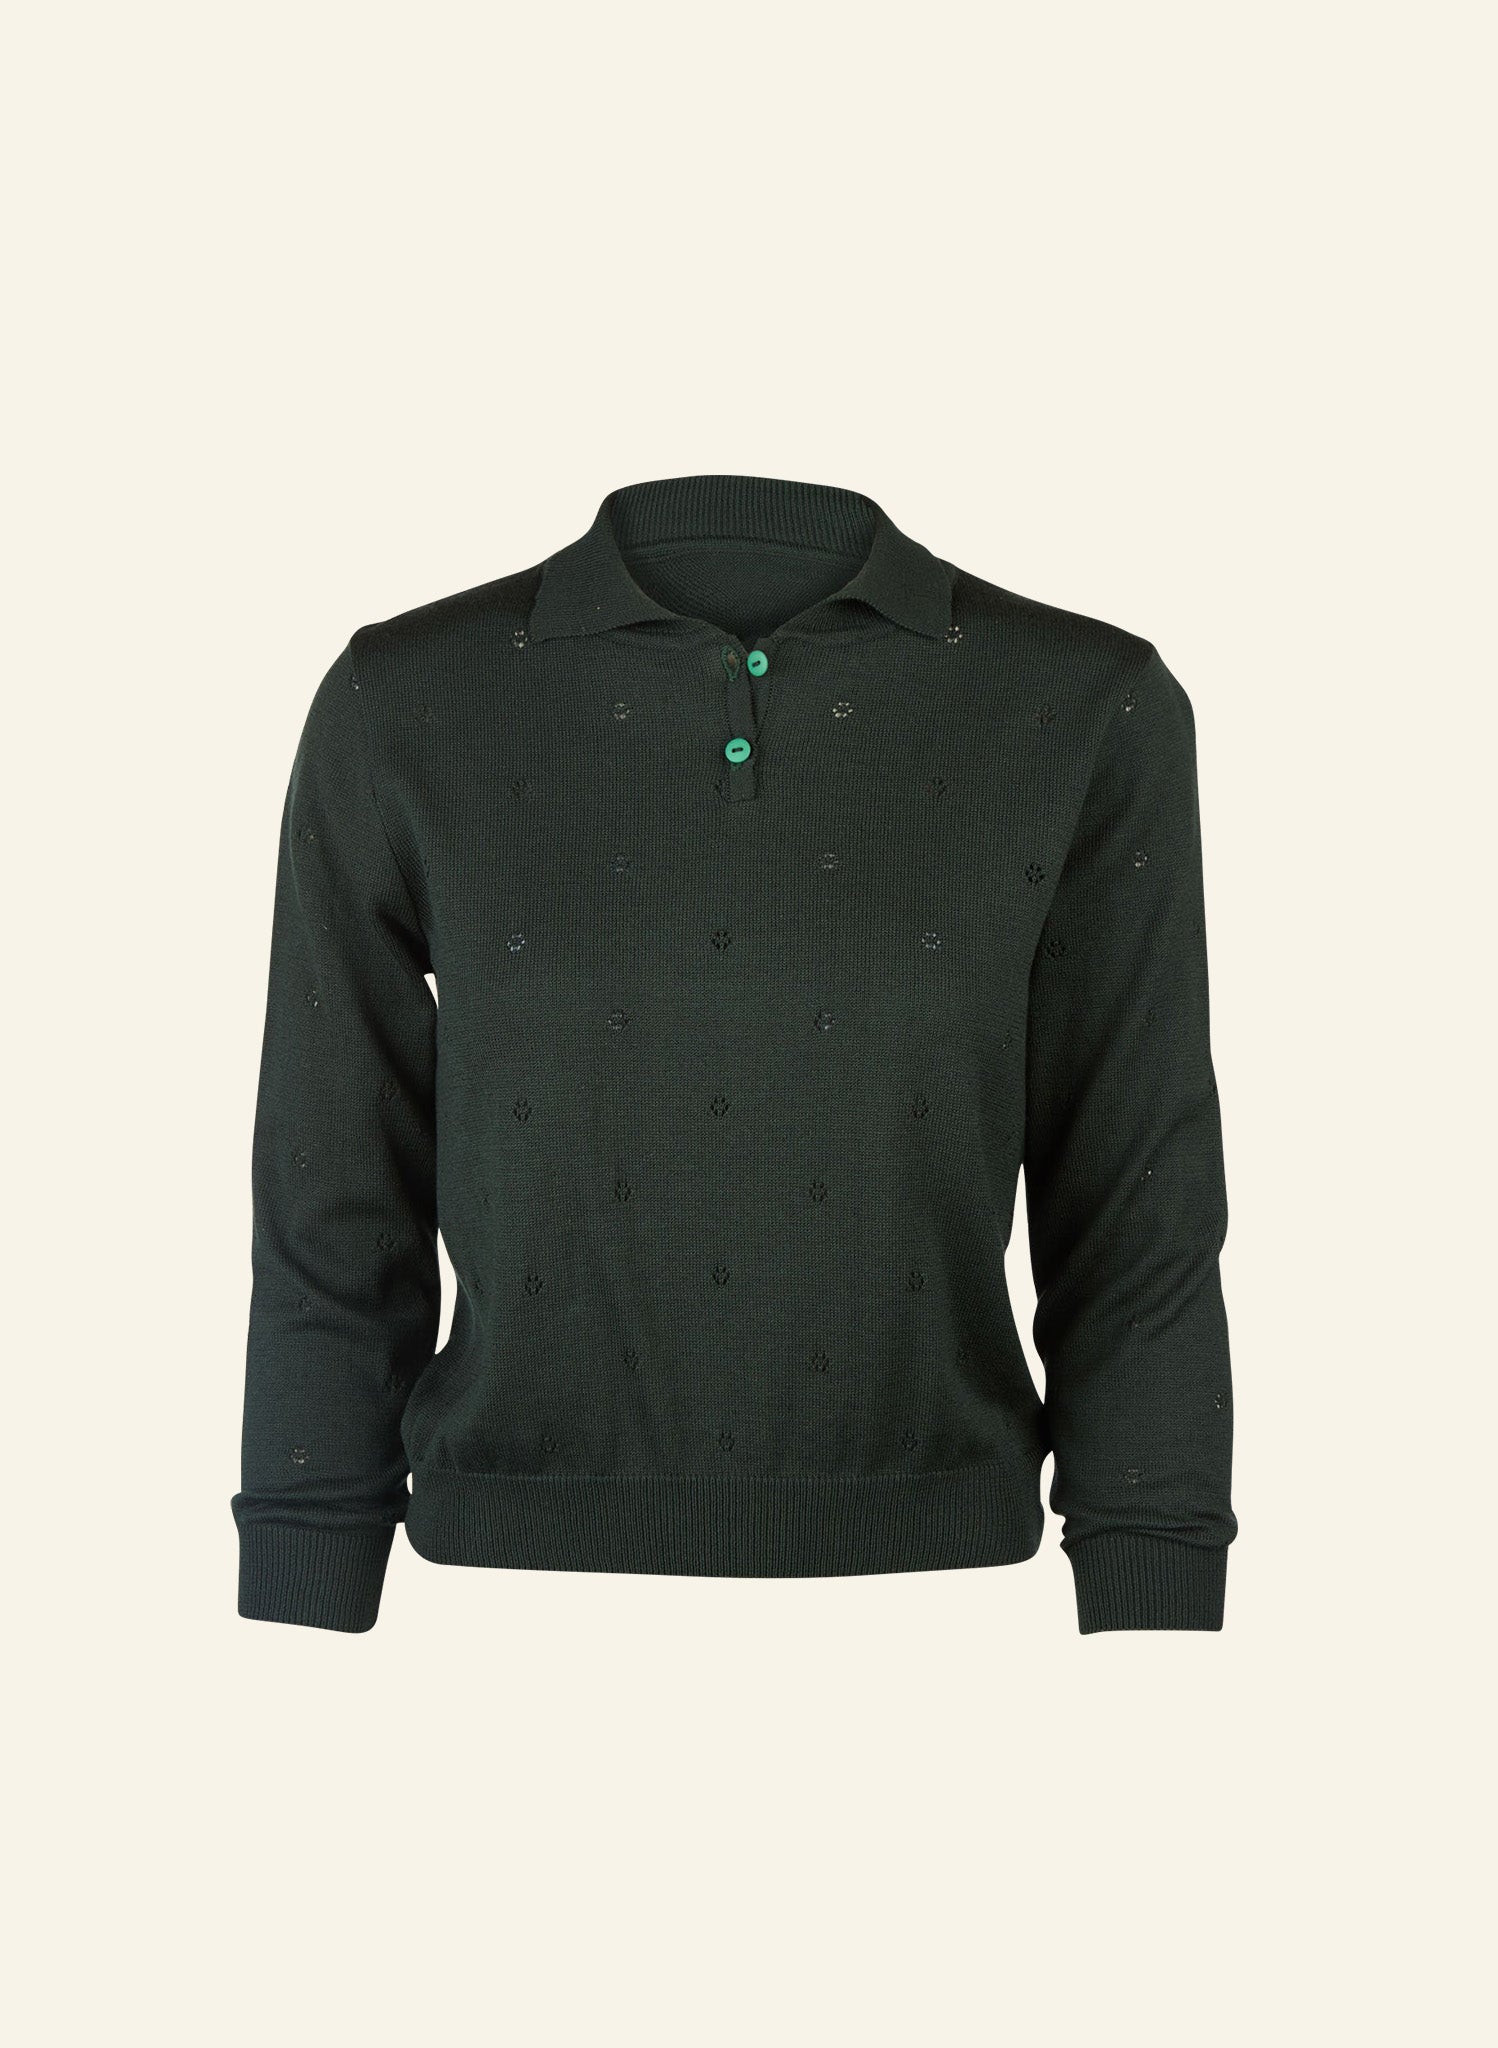 Aila - Dark Green - Knitted Top